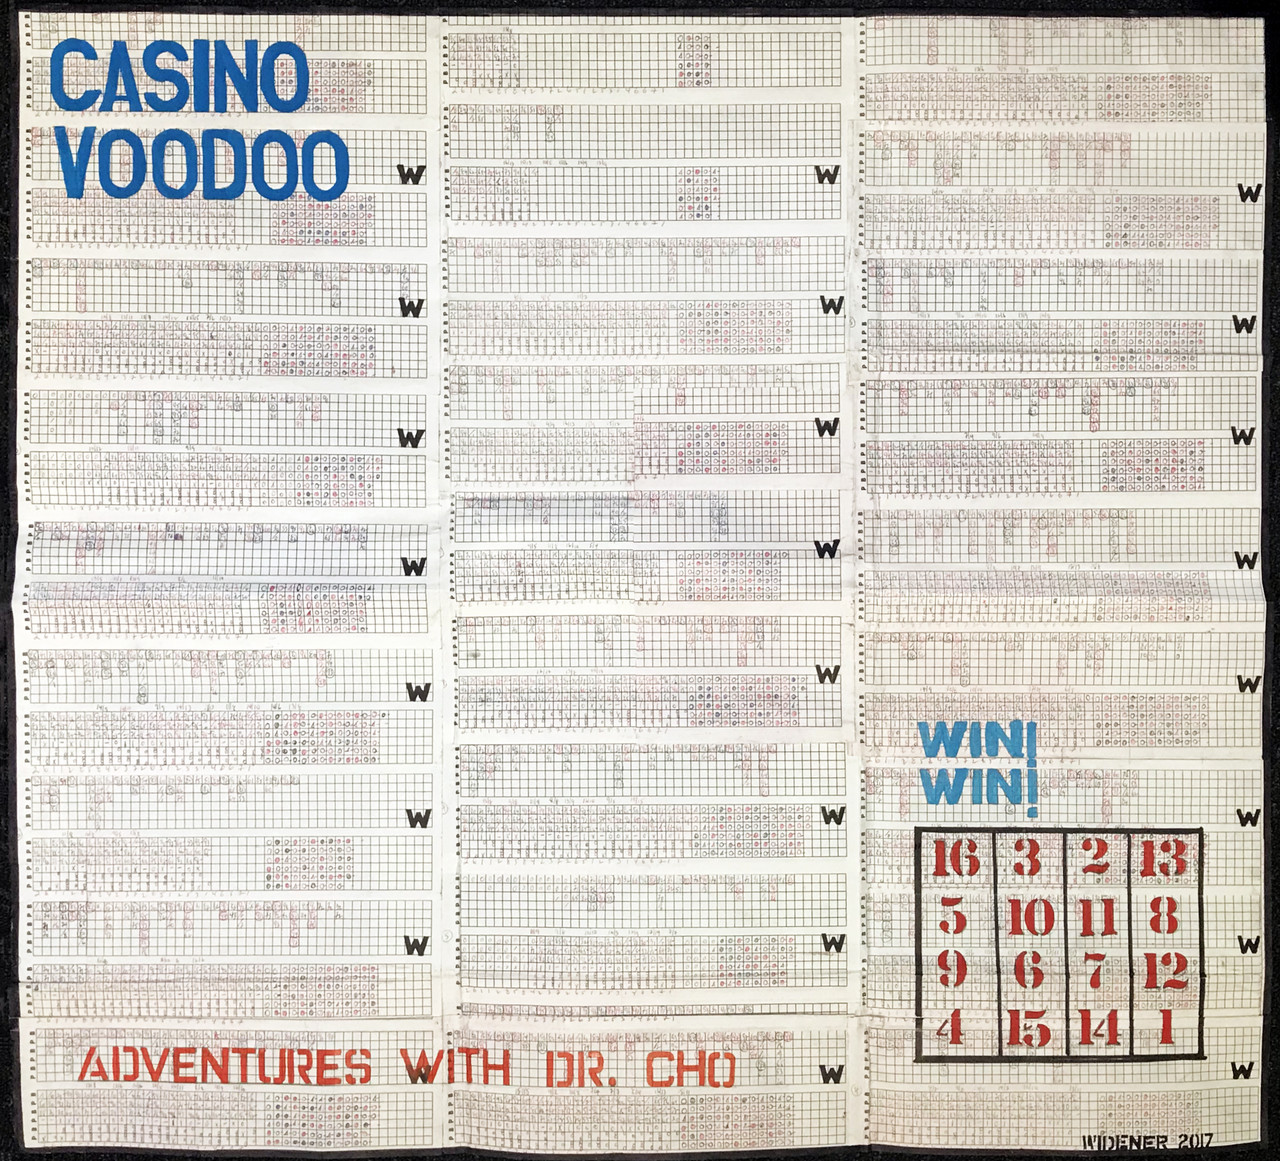 George Widener, Casion Voodoo, 2020, Mixed media on paper, 81.5 x 89.5 cm, GW 015